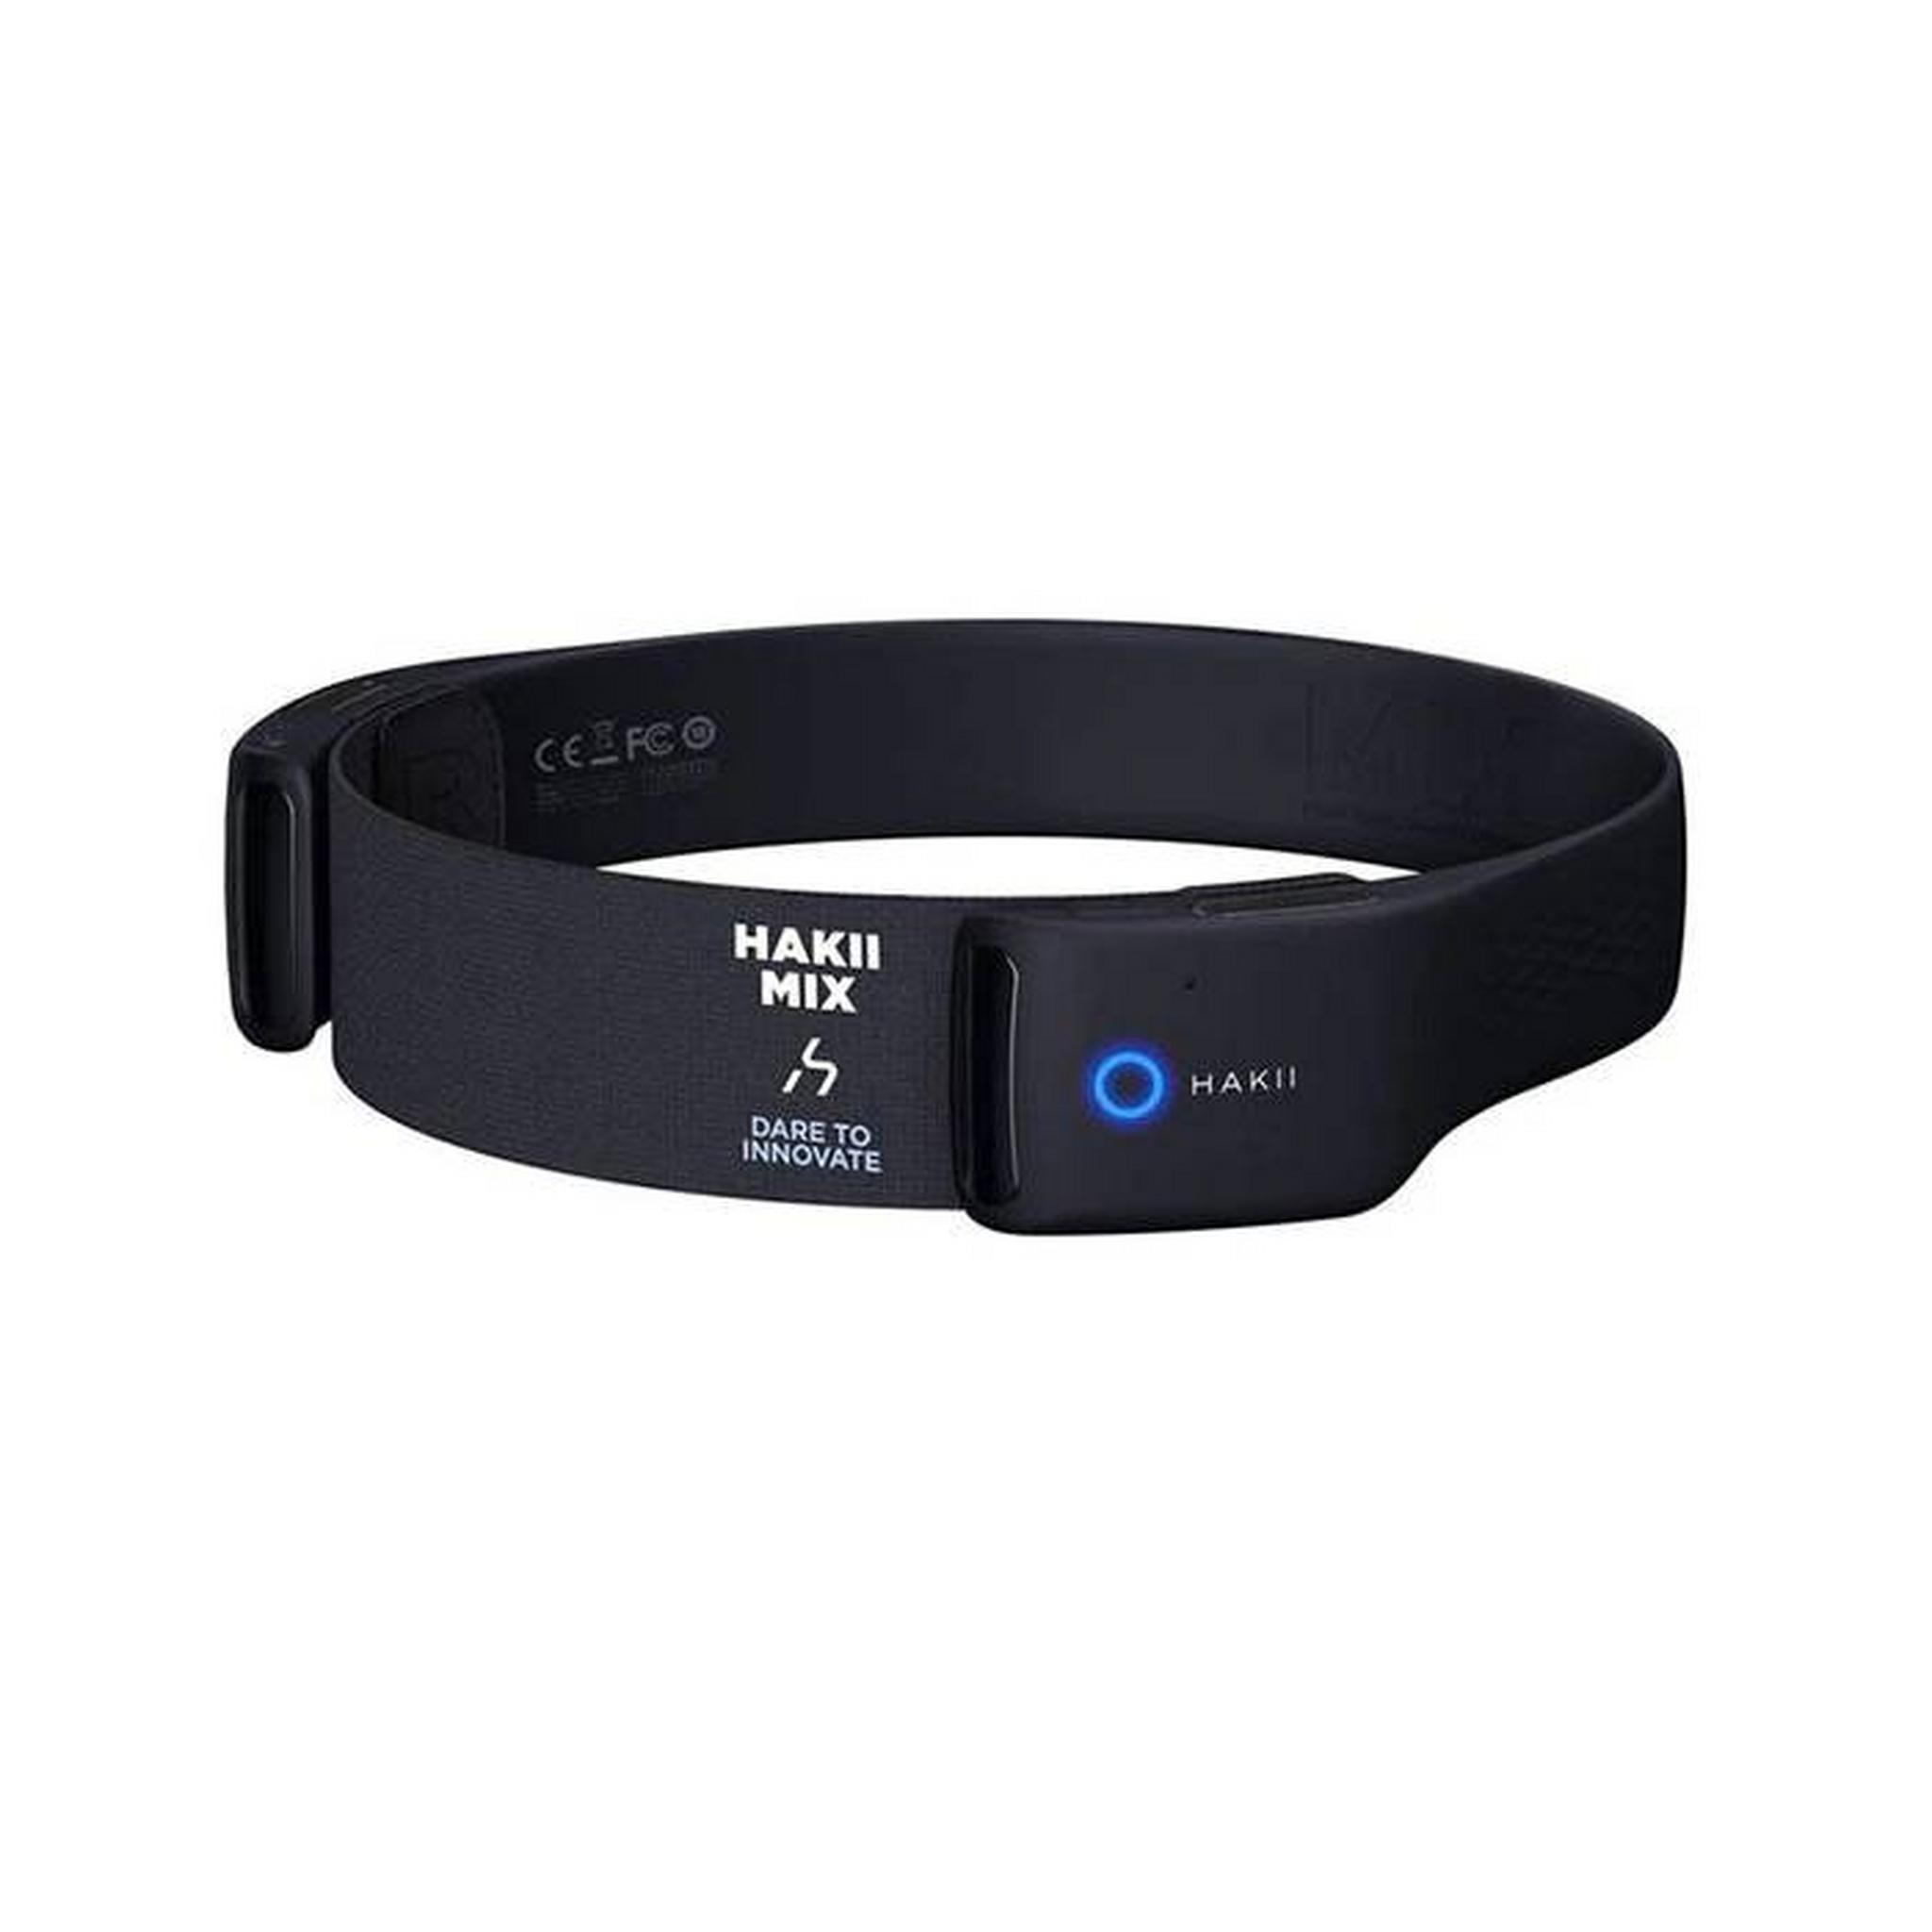 Havit Hakii Mix Smart Bluetooth Headset – Black